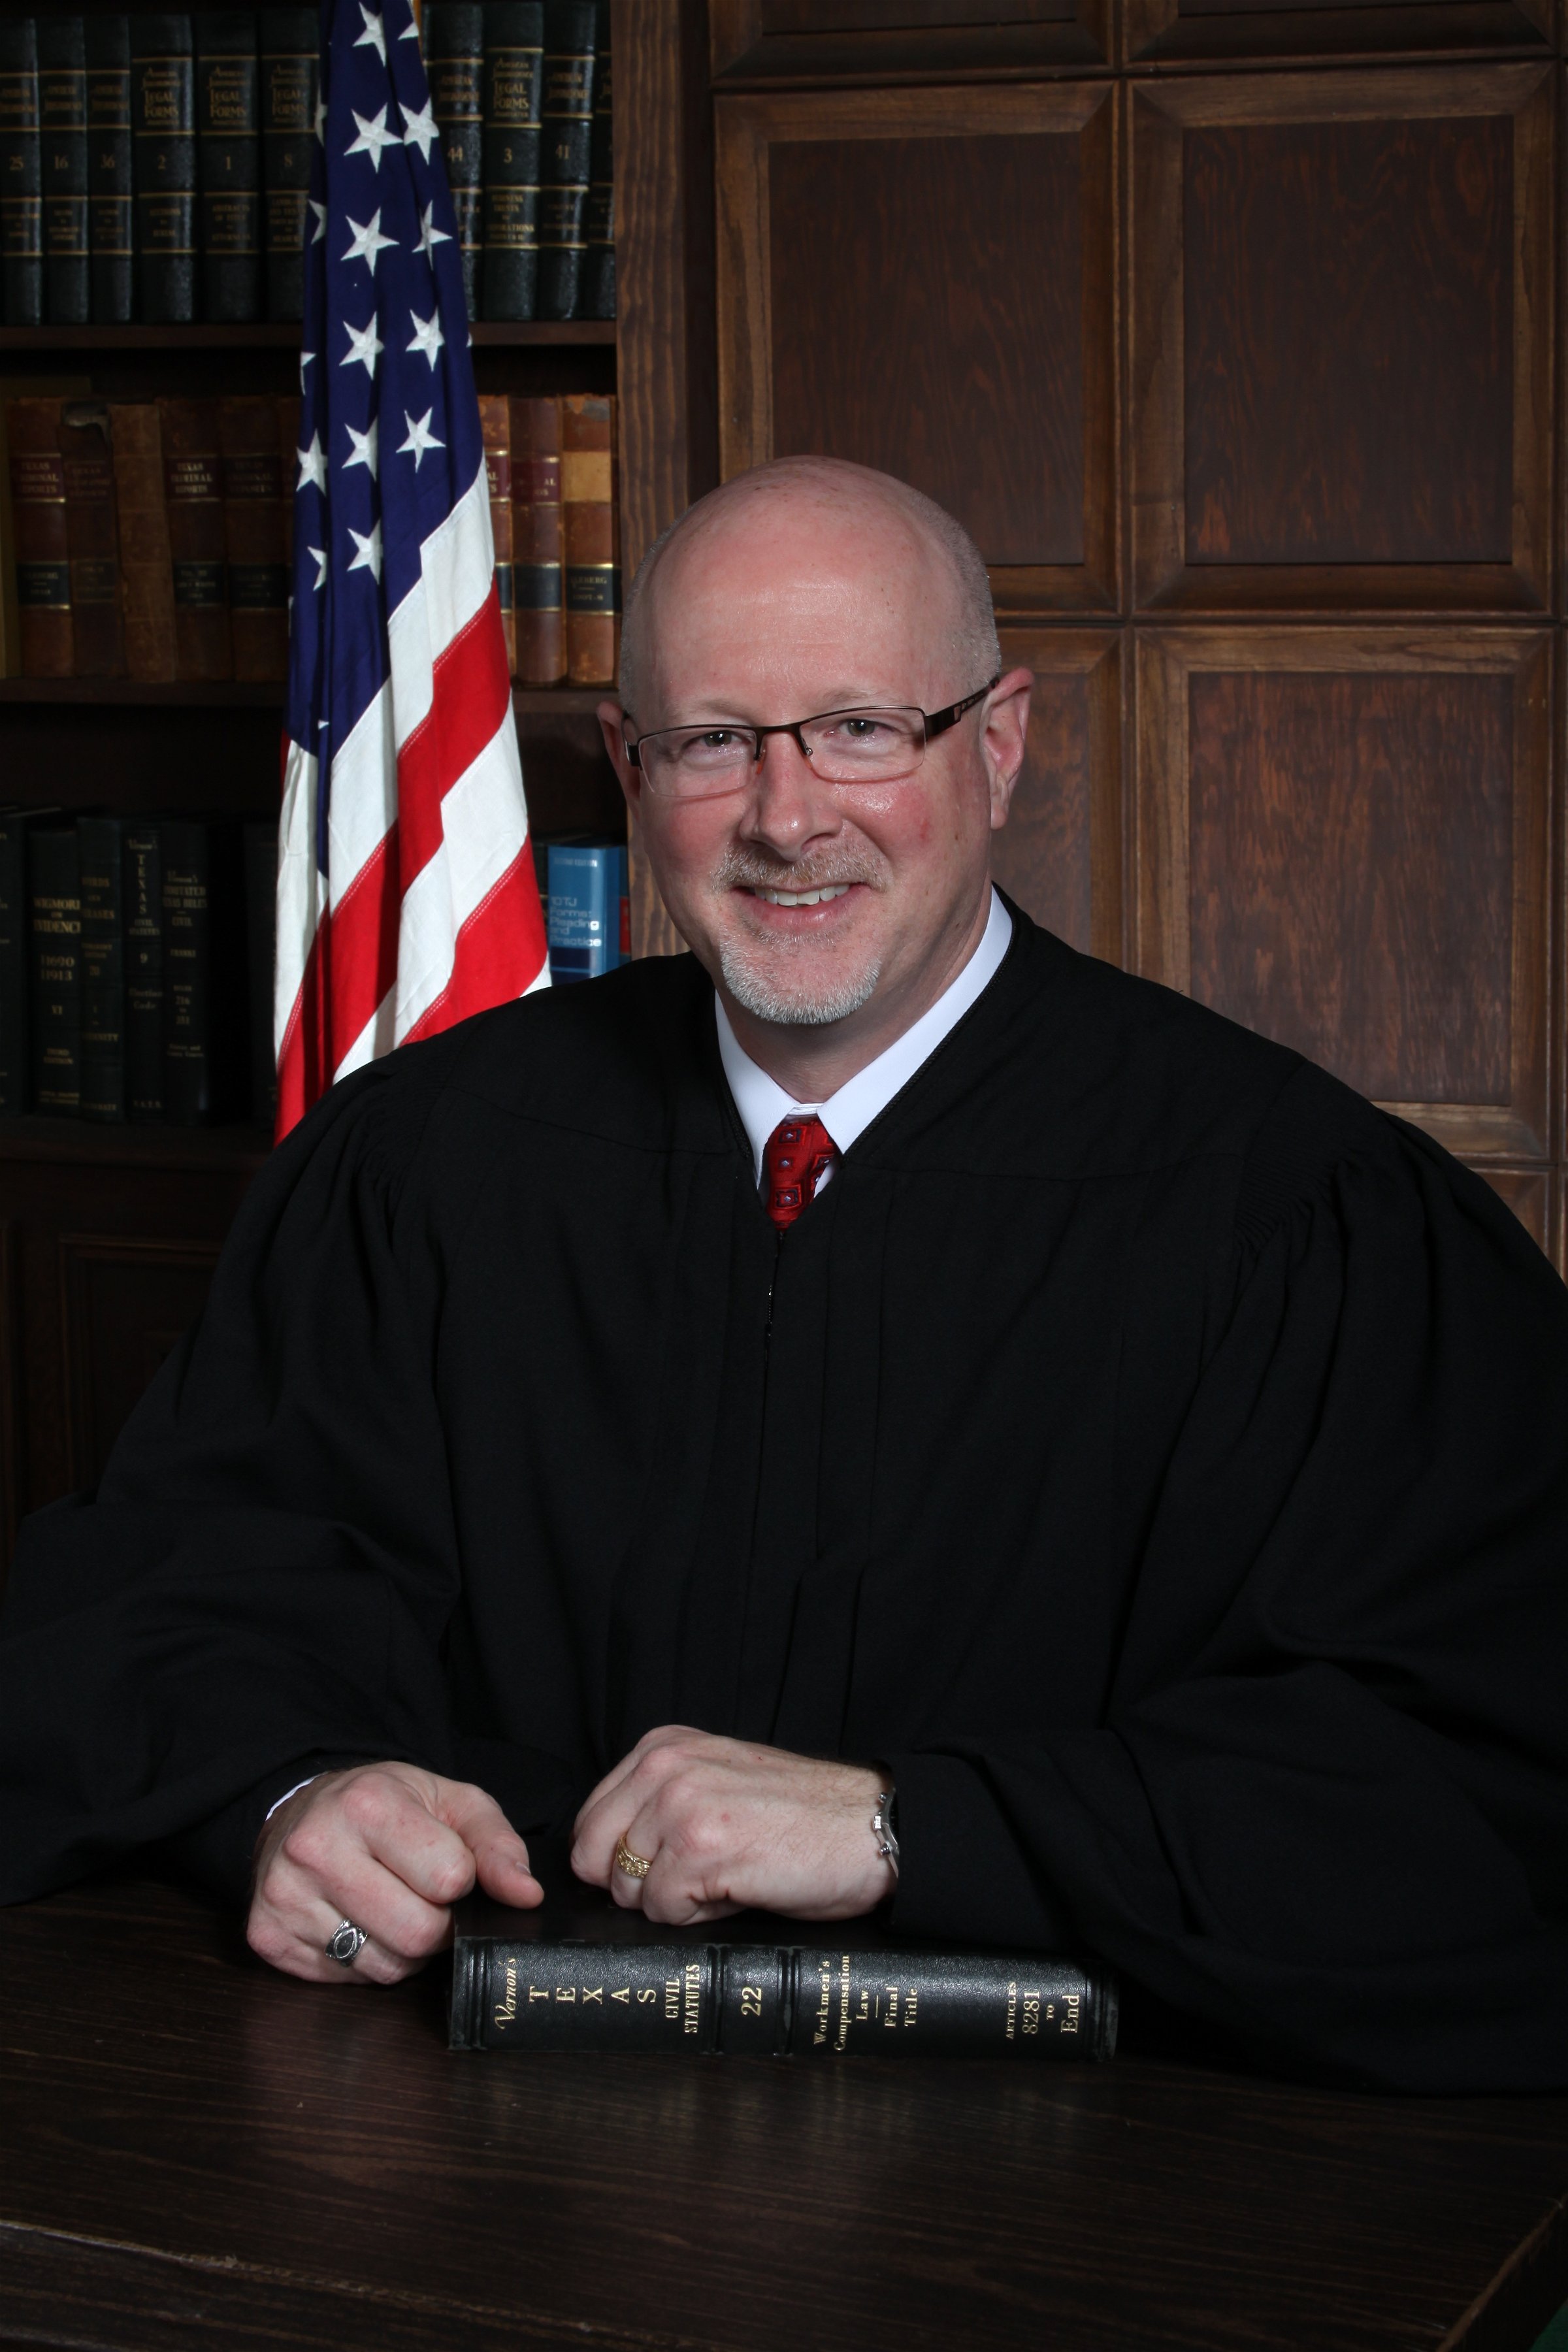 Hon. K. Randall Hufstetler in judicial robe with American Flag behind him